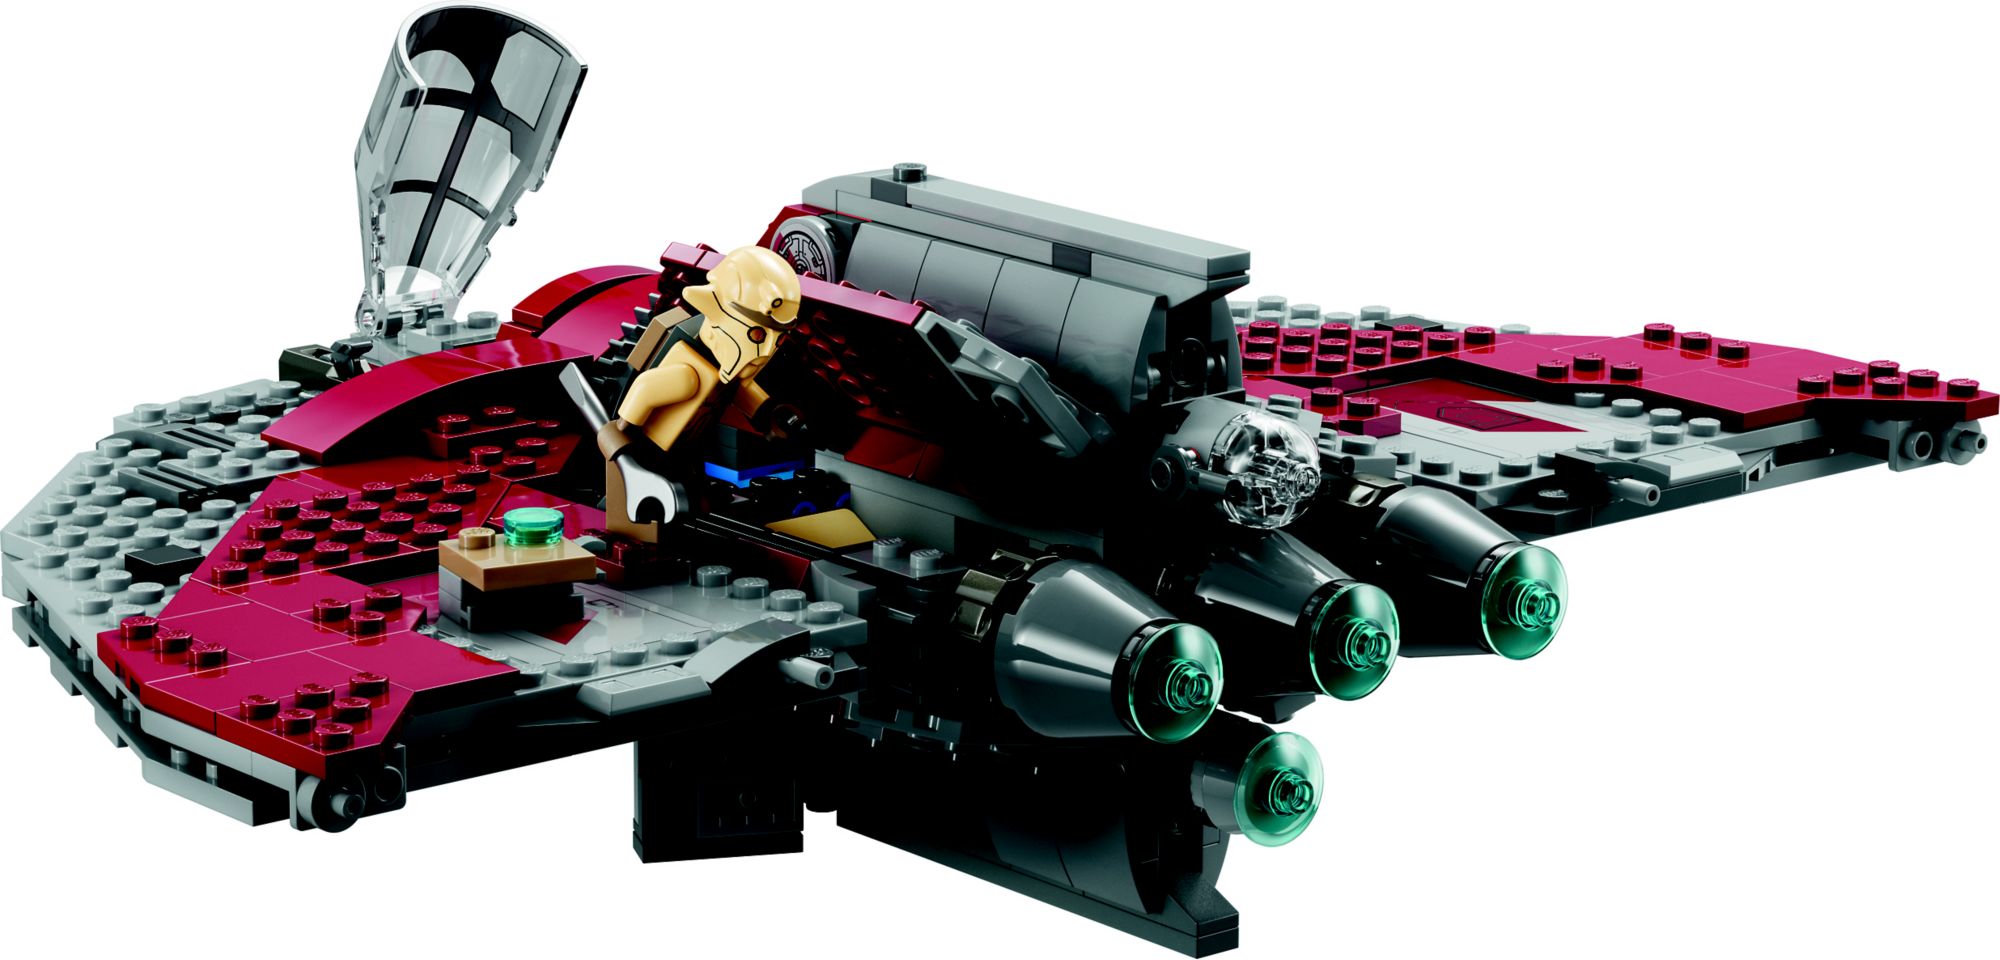 Lego Star Wars Ahsoka Tano's T-6 Jedi Shuttle Building Toy Set